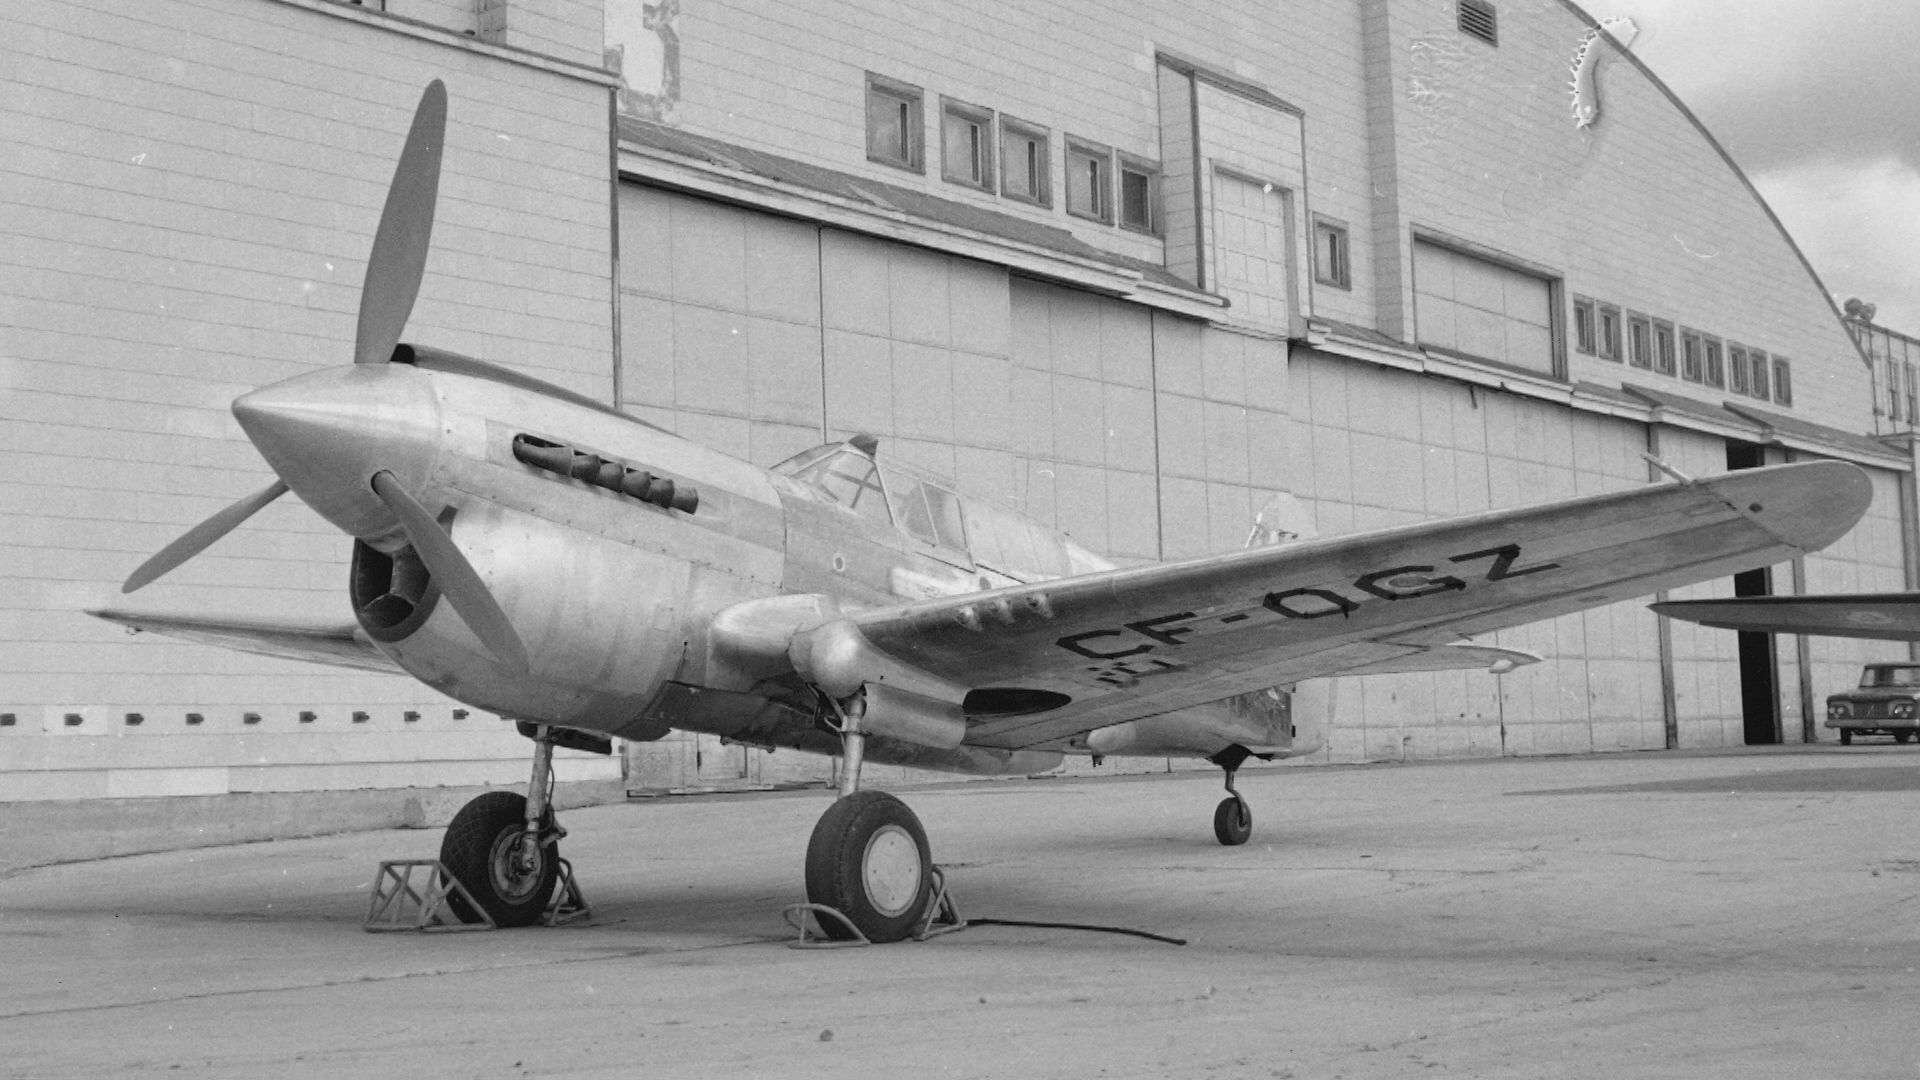 Aviation historians reflect on loss of Hangar 11